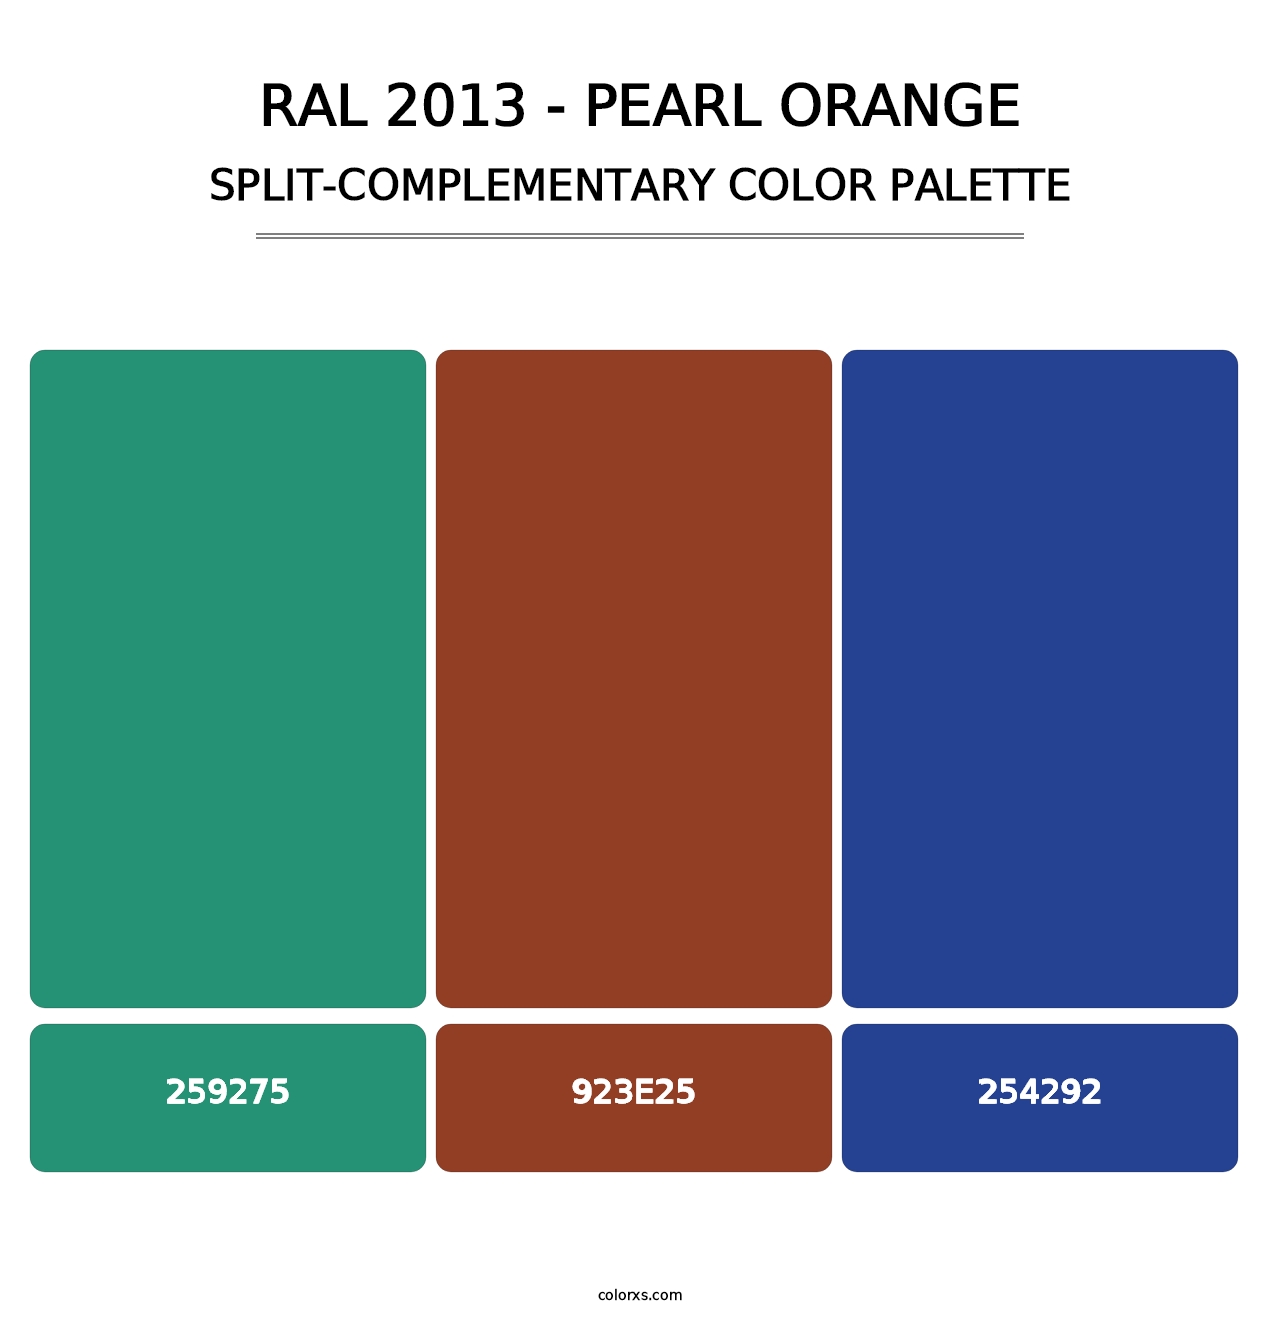 RAL 2013 - Pearl Orange - Split-Complementary Color Palette